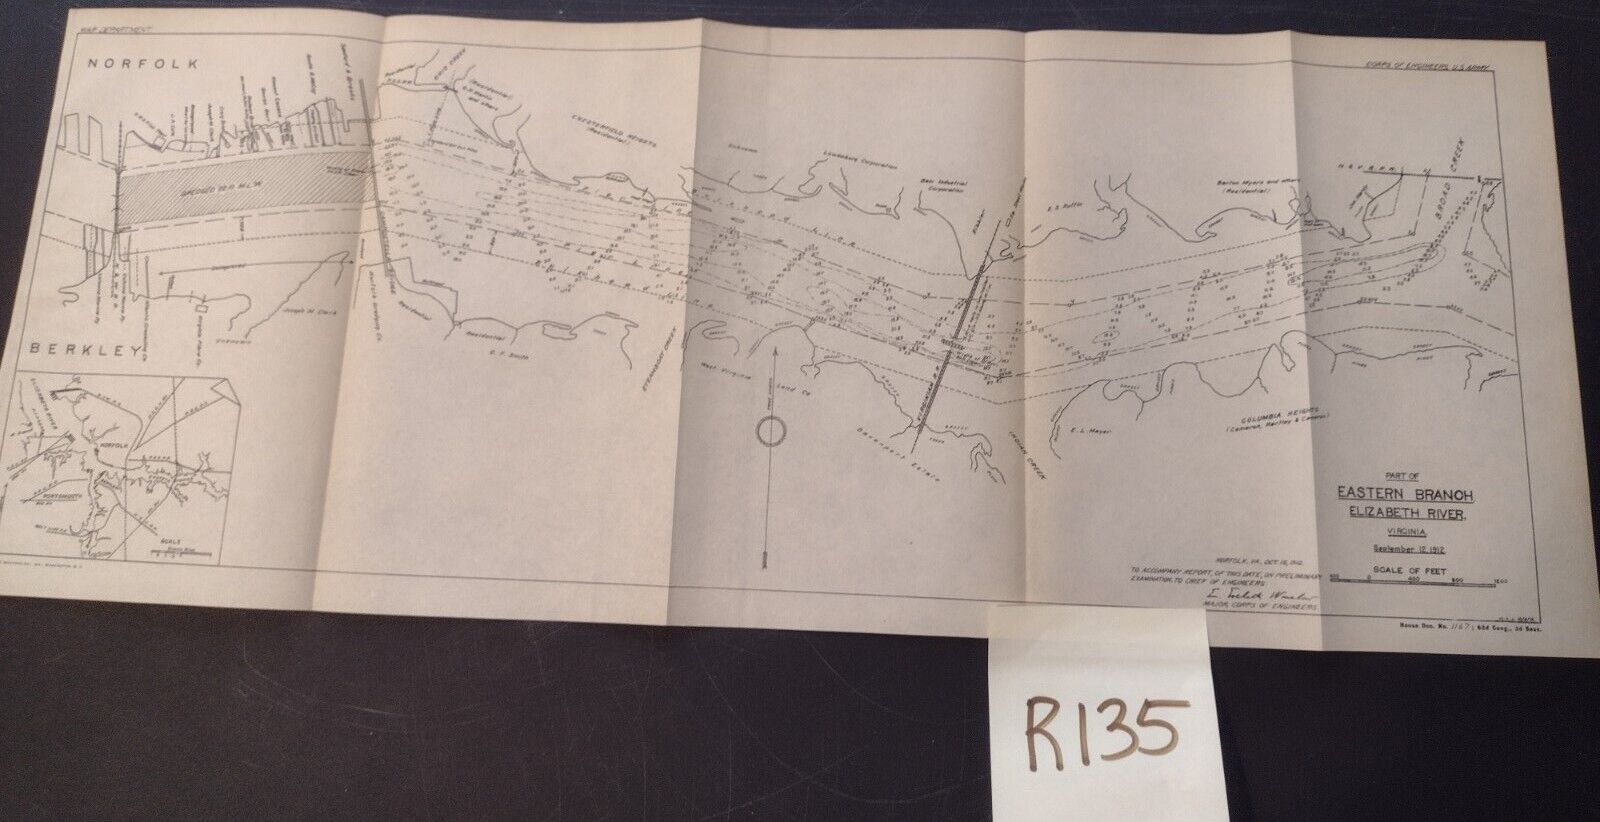 1912 East Branch Elizabeth River Berkeley Norfolk VA Army Engineering Sketch Map